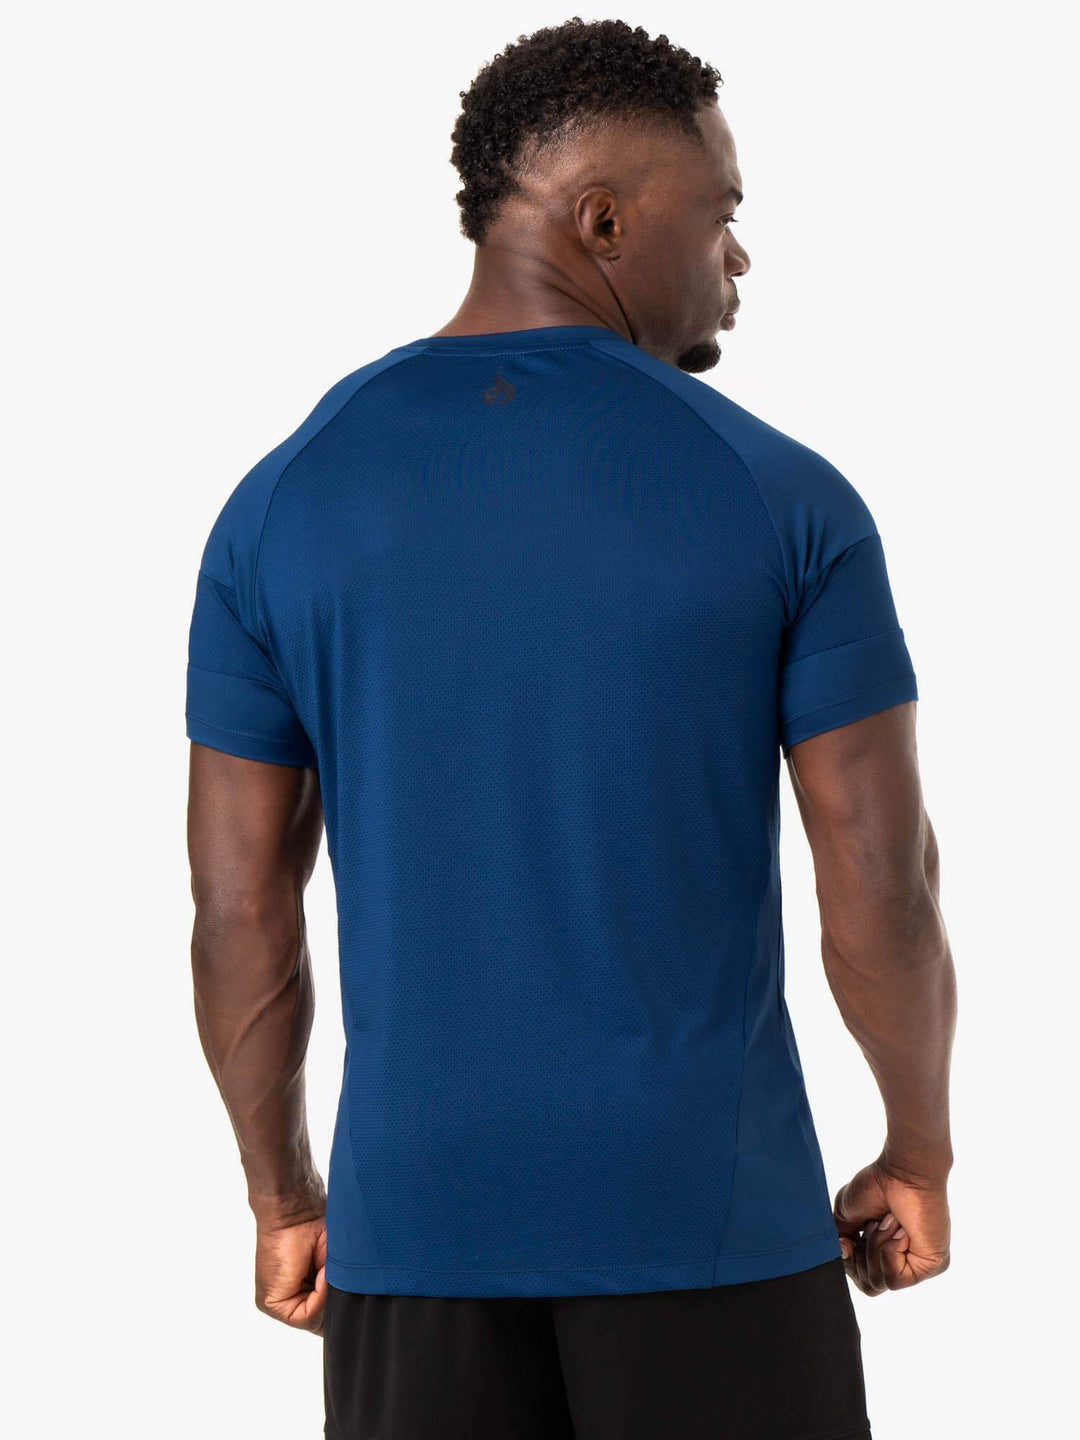 Action Mesh T-Shirt - Blue Clothing Ryderwear 